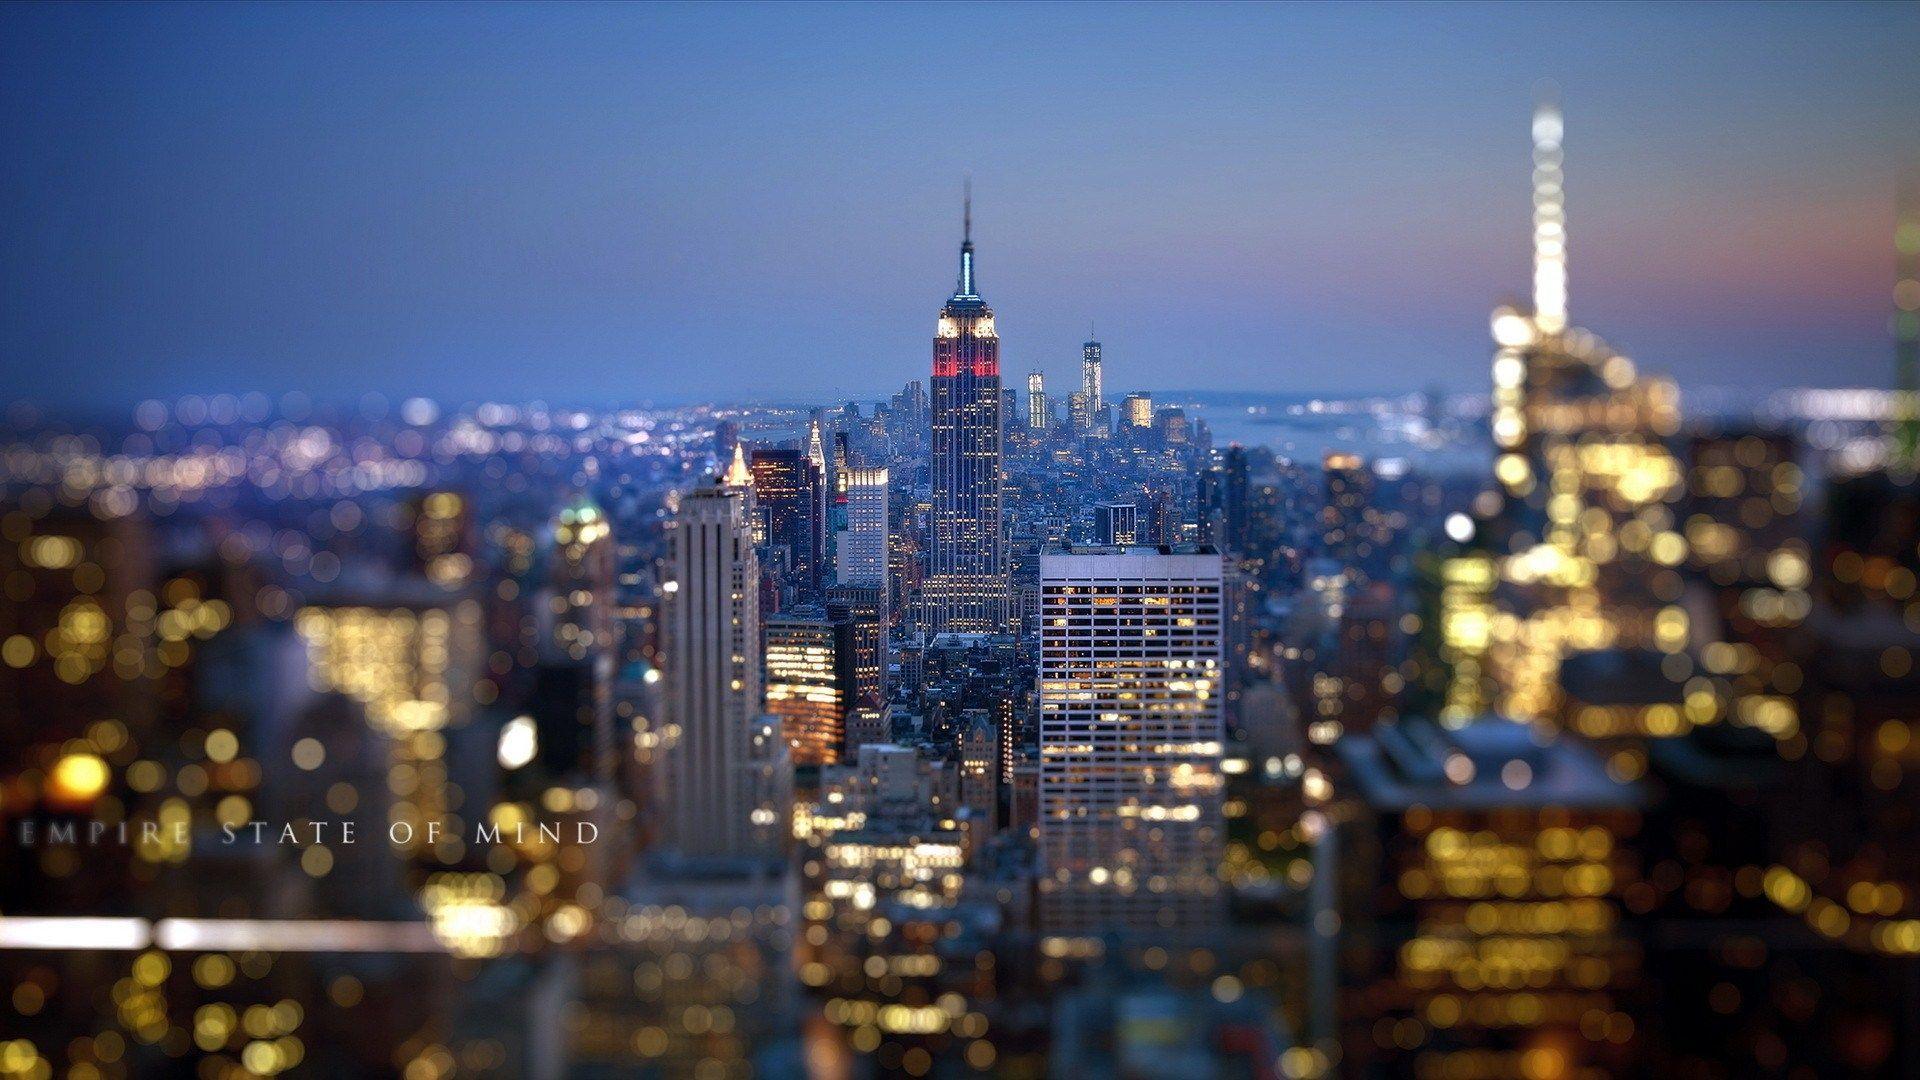 Empire State New York At Night Wallpaper HD. EyeCandy